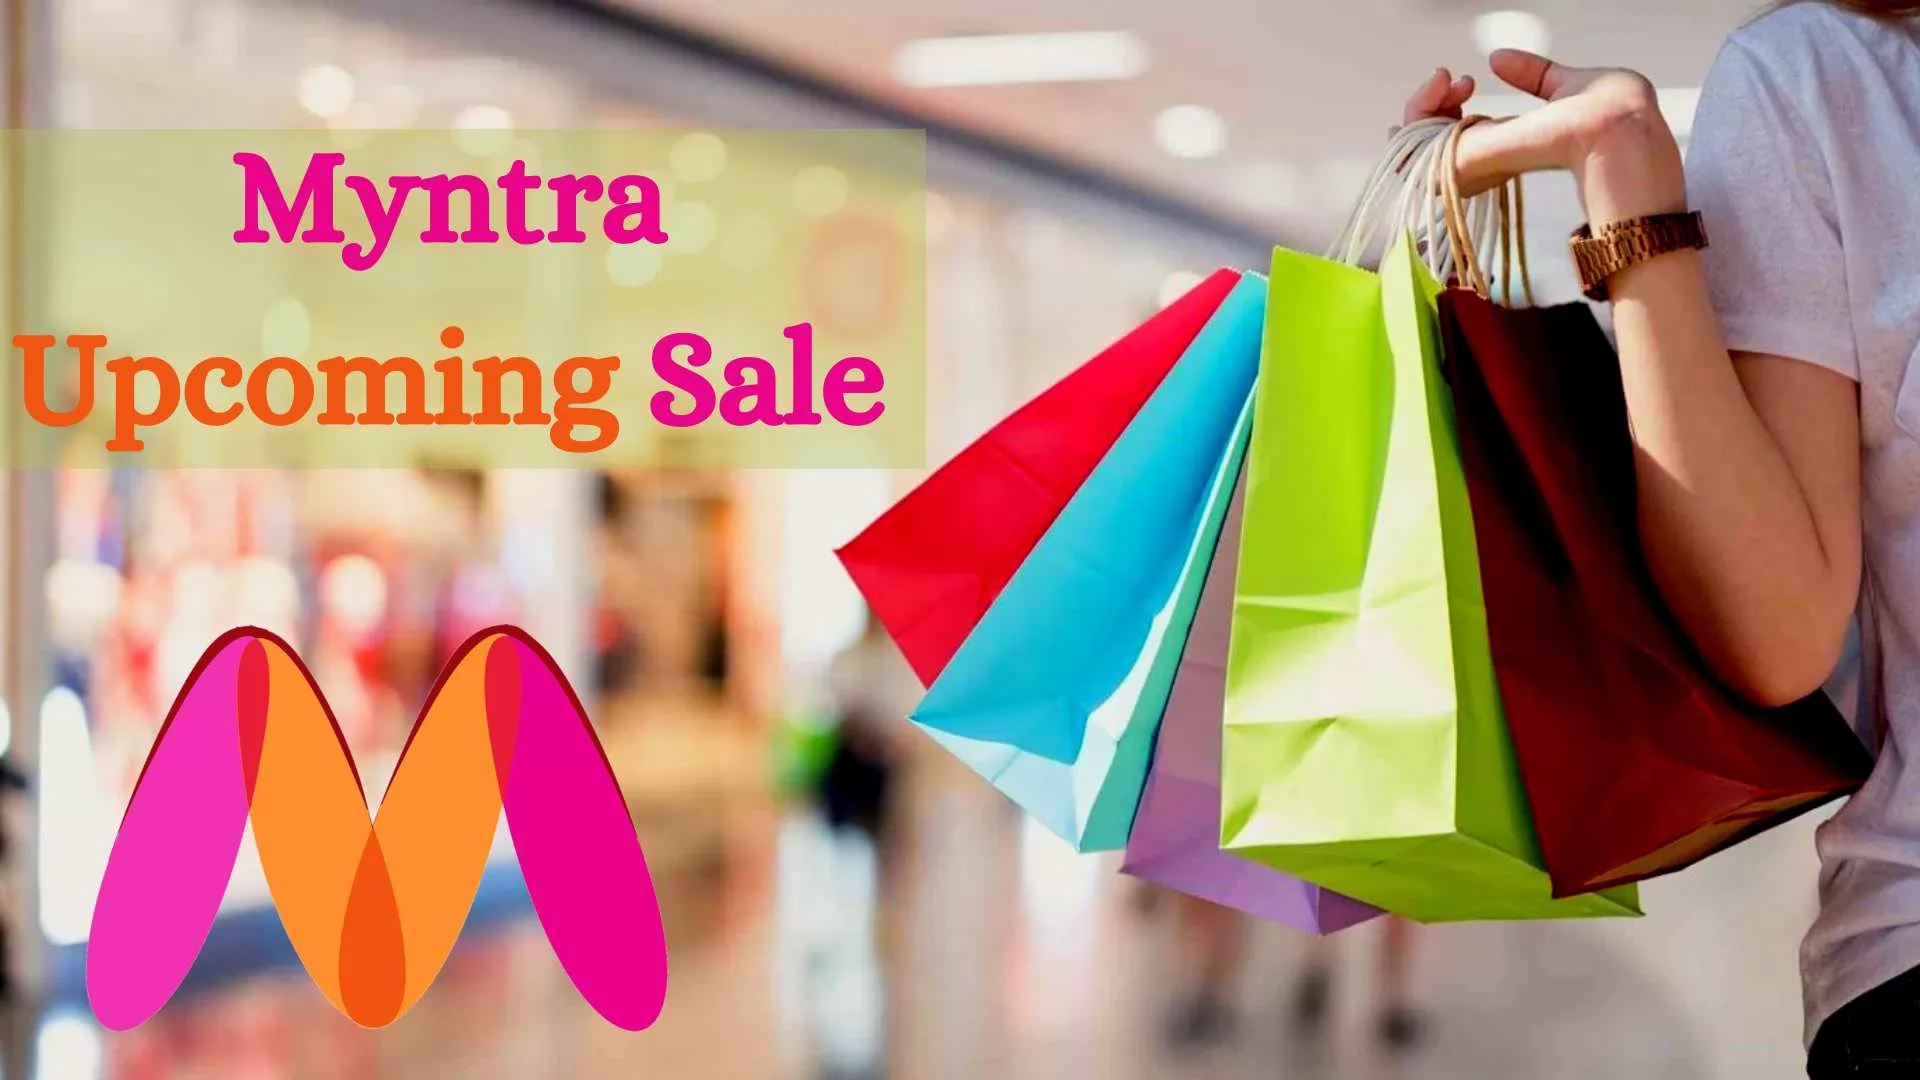 Myntra Birthday Blast Sale Starting Soon! Upcoming deals & offers